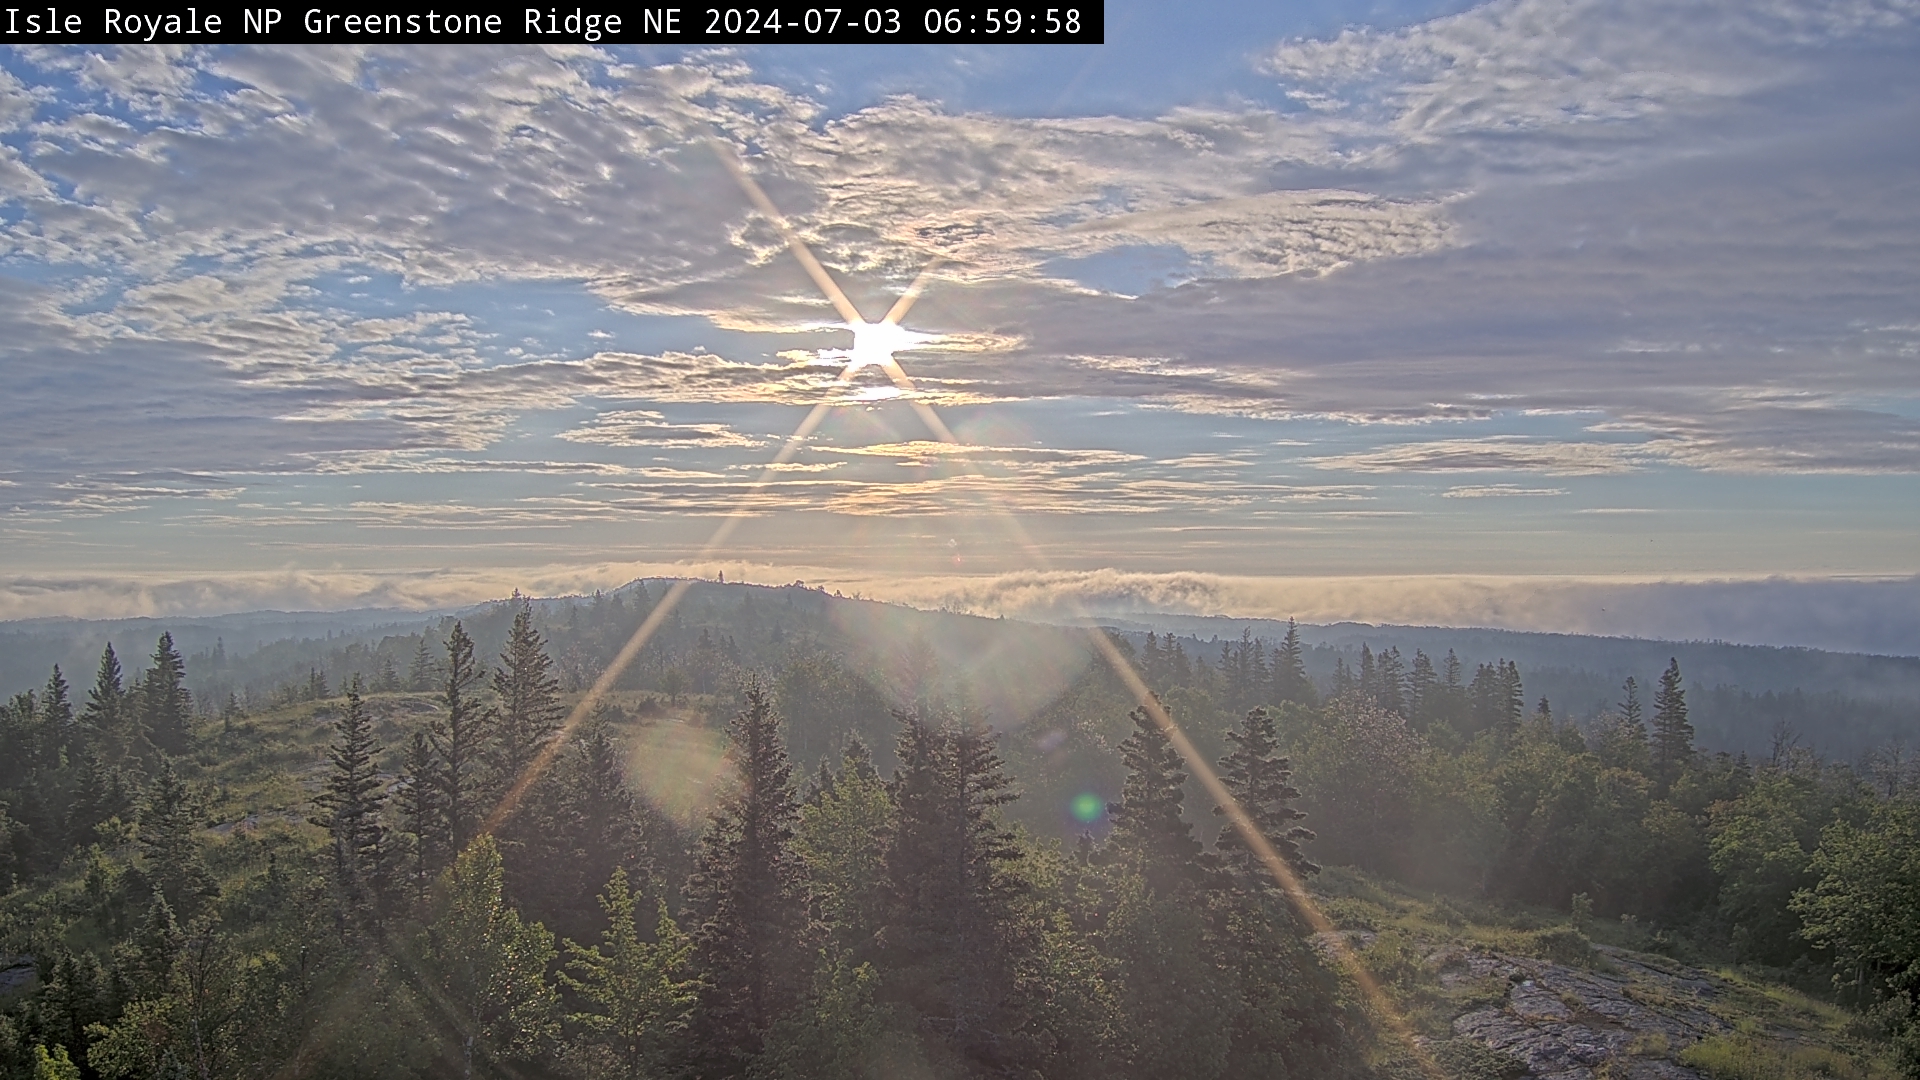 Greenstone Ridge Northeast Webcam preview image